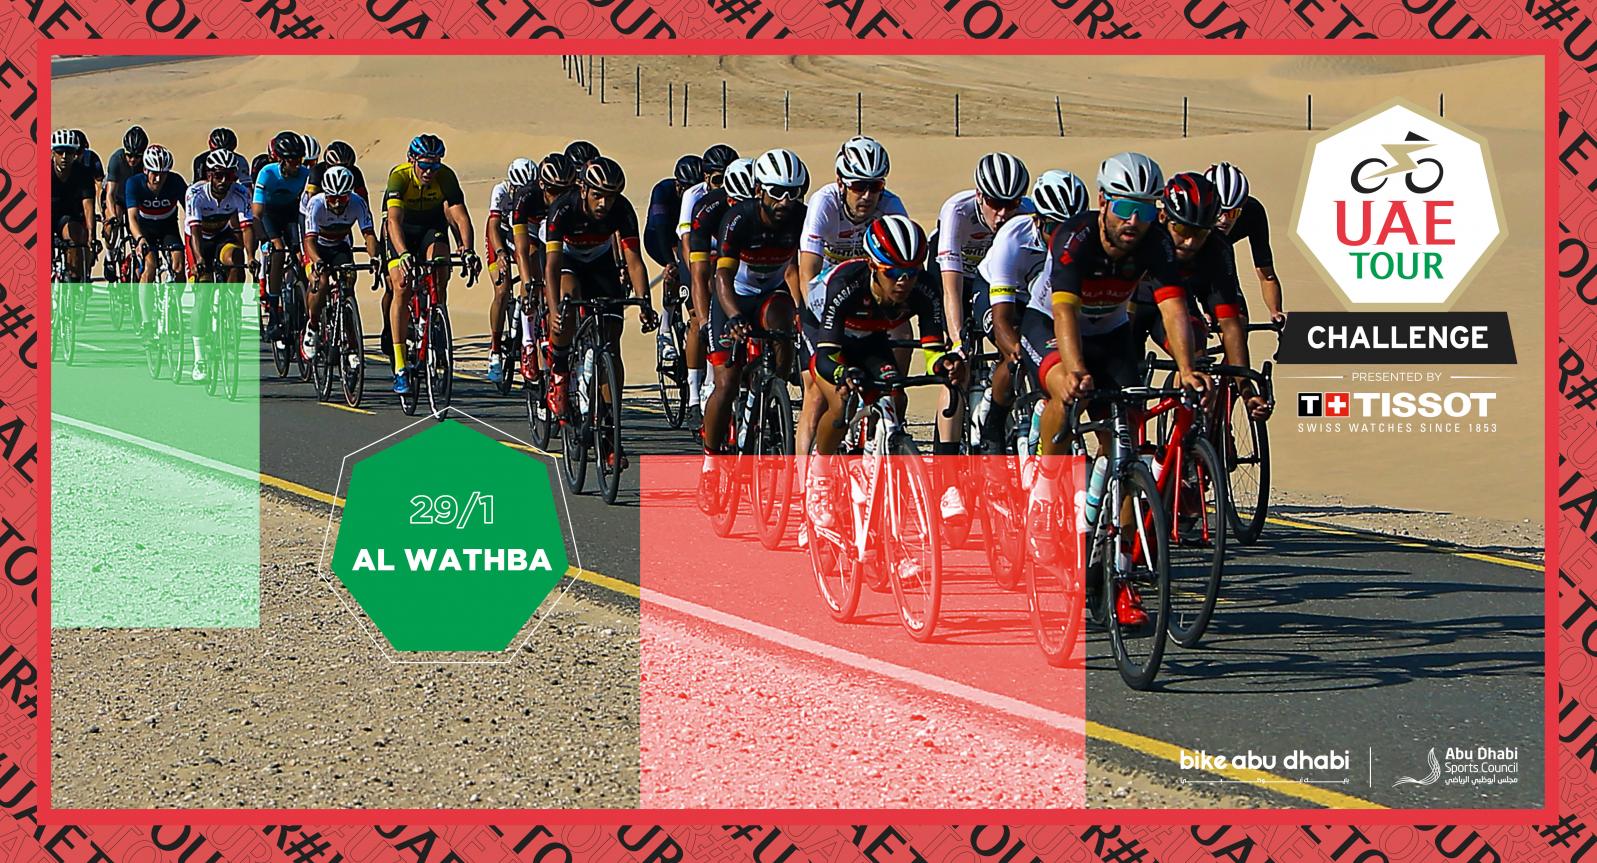 Al Wathba UAE Tour Challenge presented by Tissot